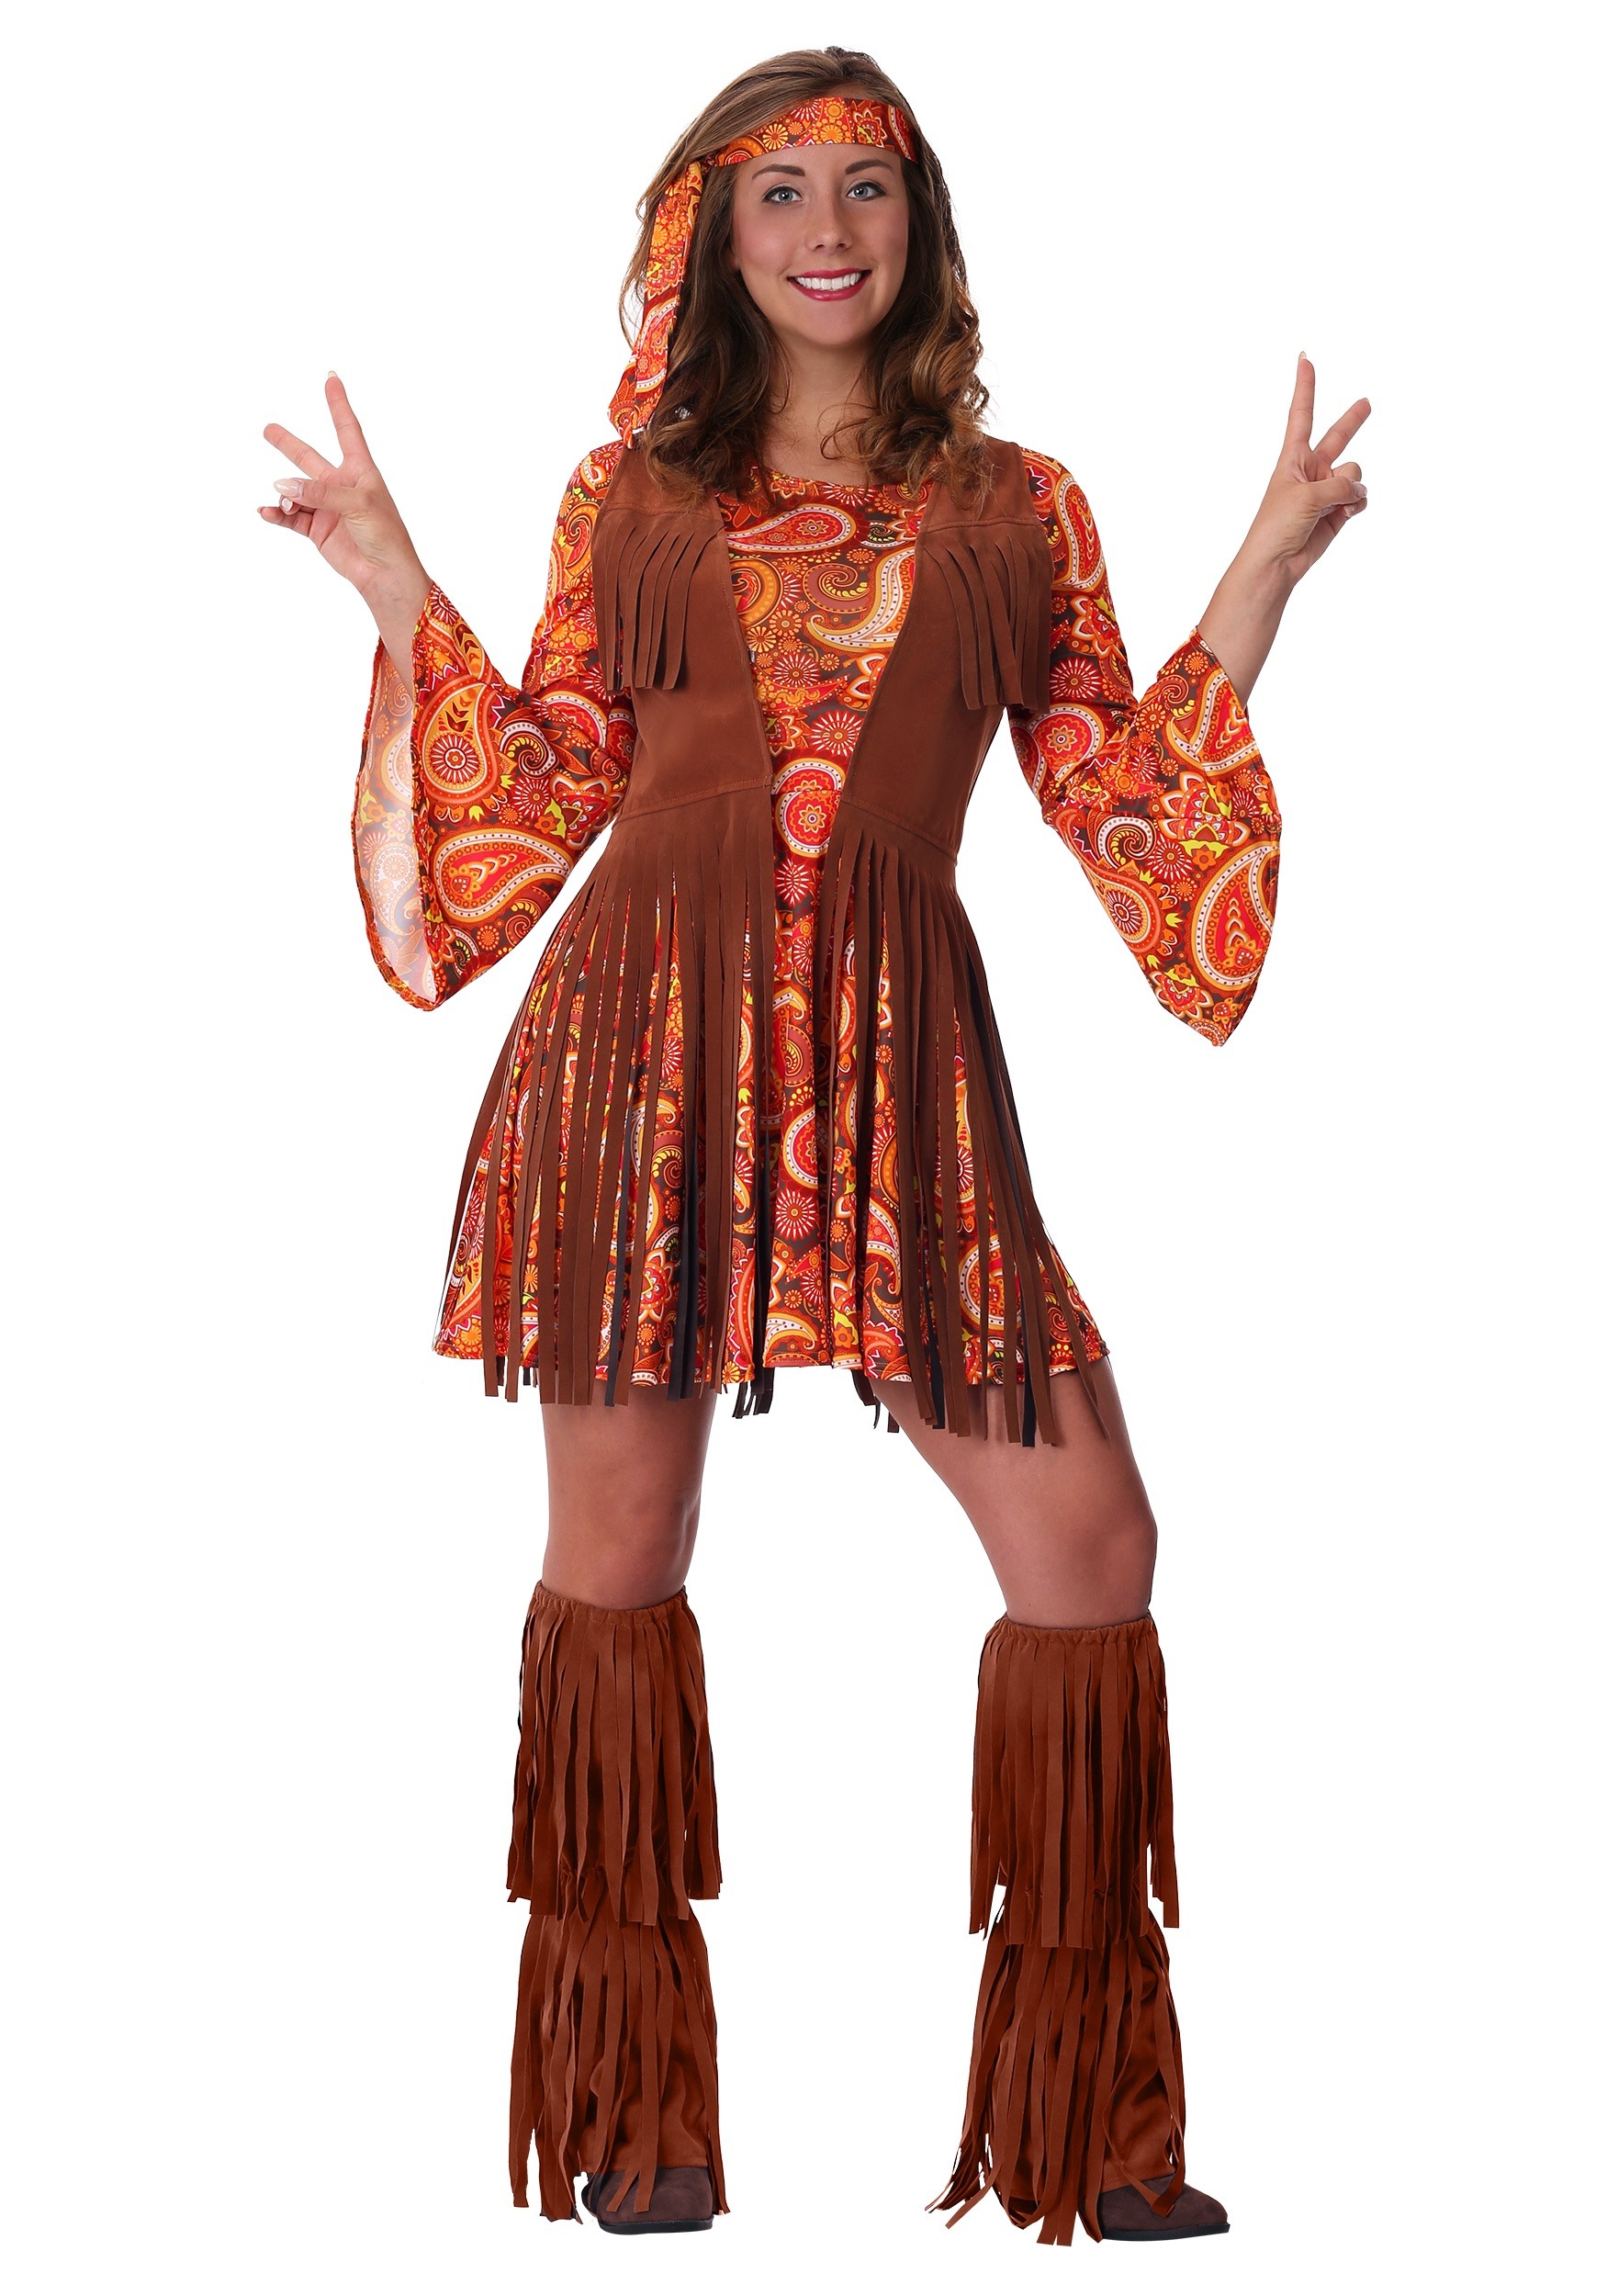 Photos - Fancy Dress FUN Costumes Fringe Hippie Costume for Women Orange/Yellow FUN0364AD